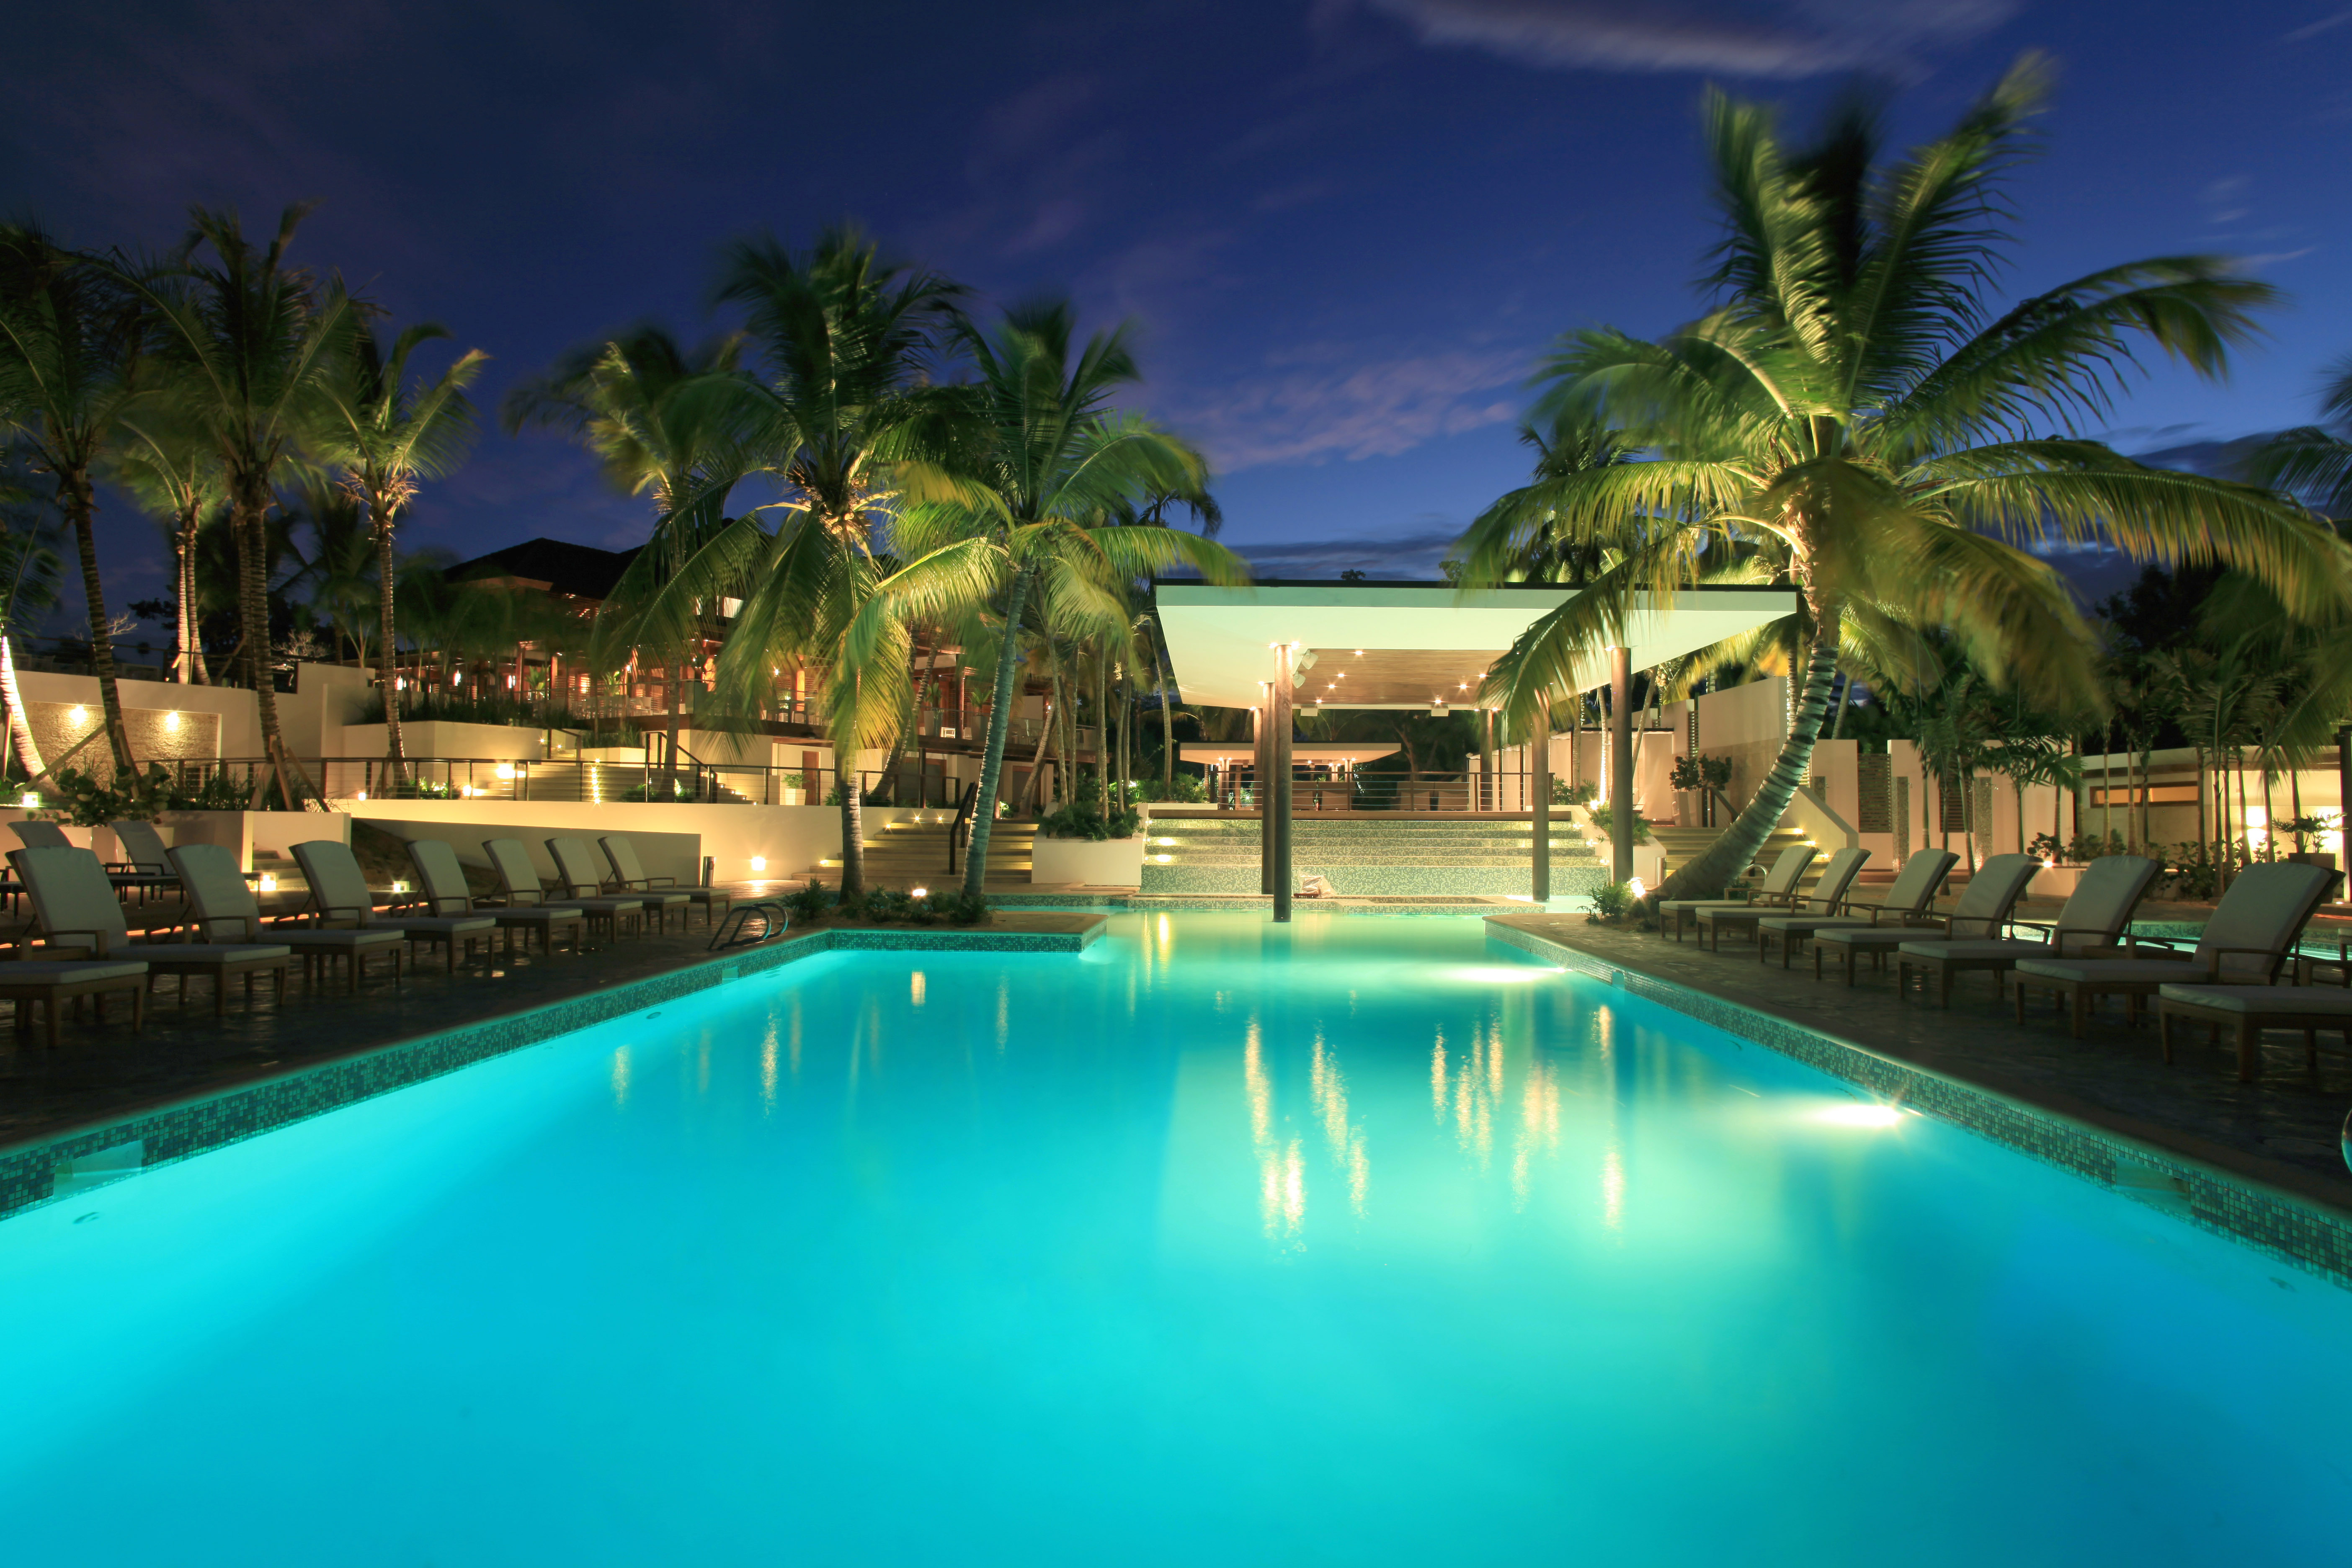 Casa de Campo Luxury Resort | All Inclusive Dominican Republic | Celebrity Kardashian Vacation | Main Pool